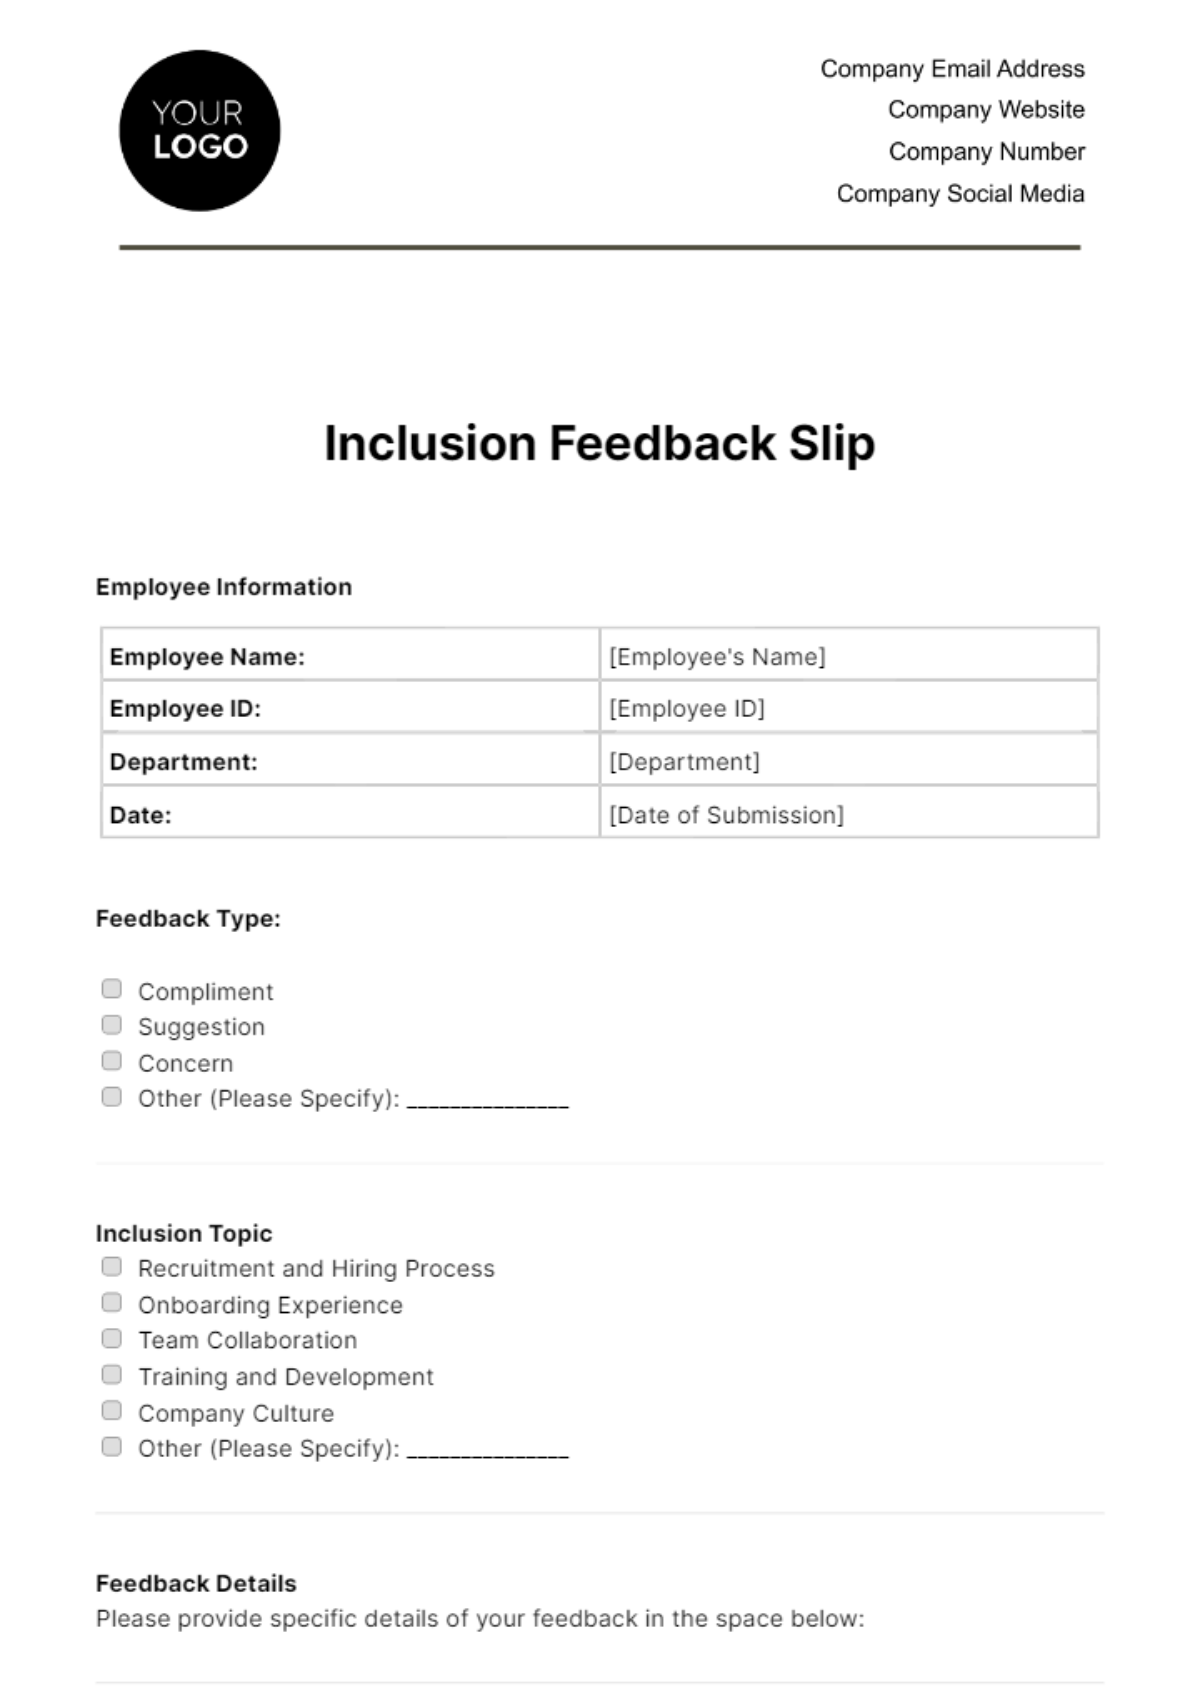 Inclusion Feedback Slip HR Template